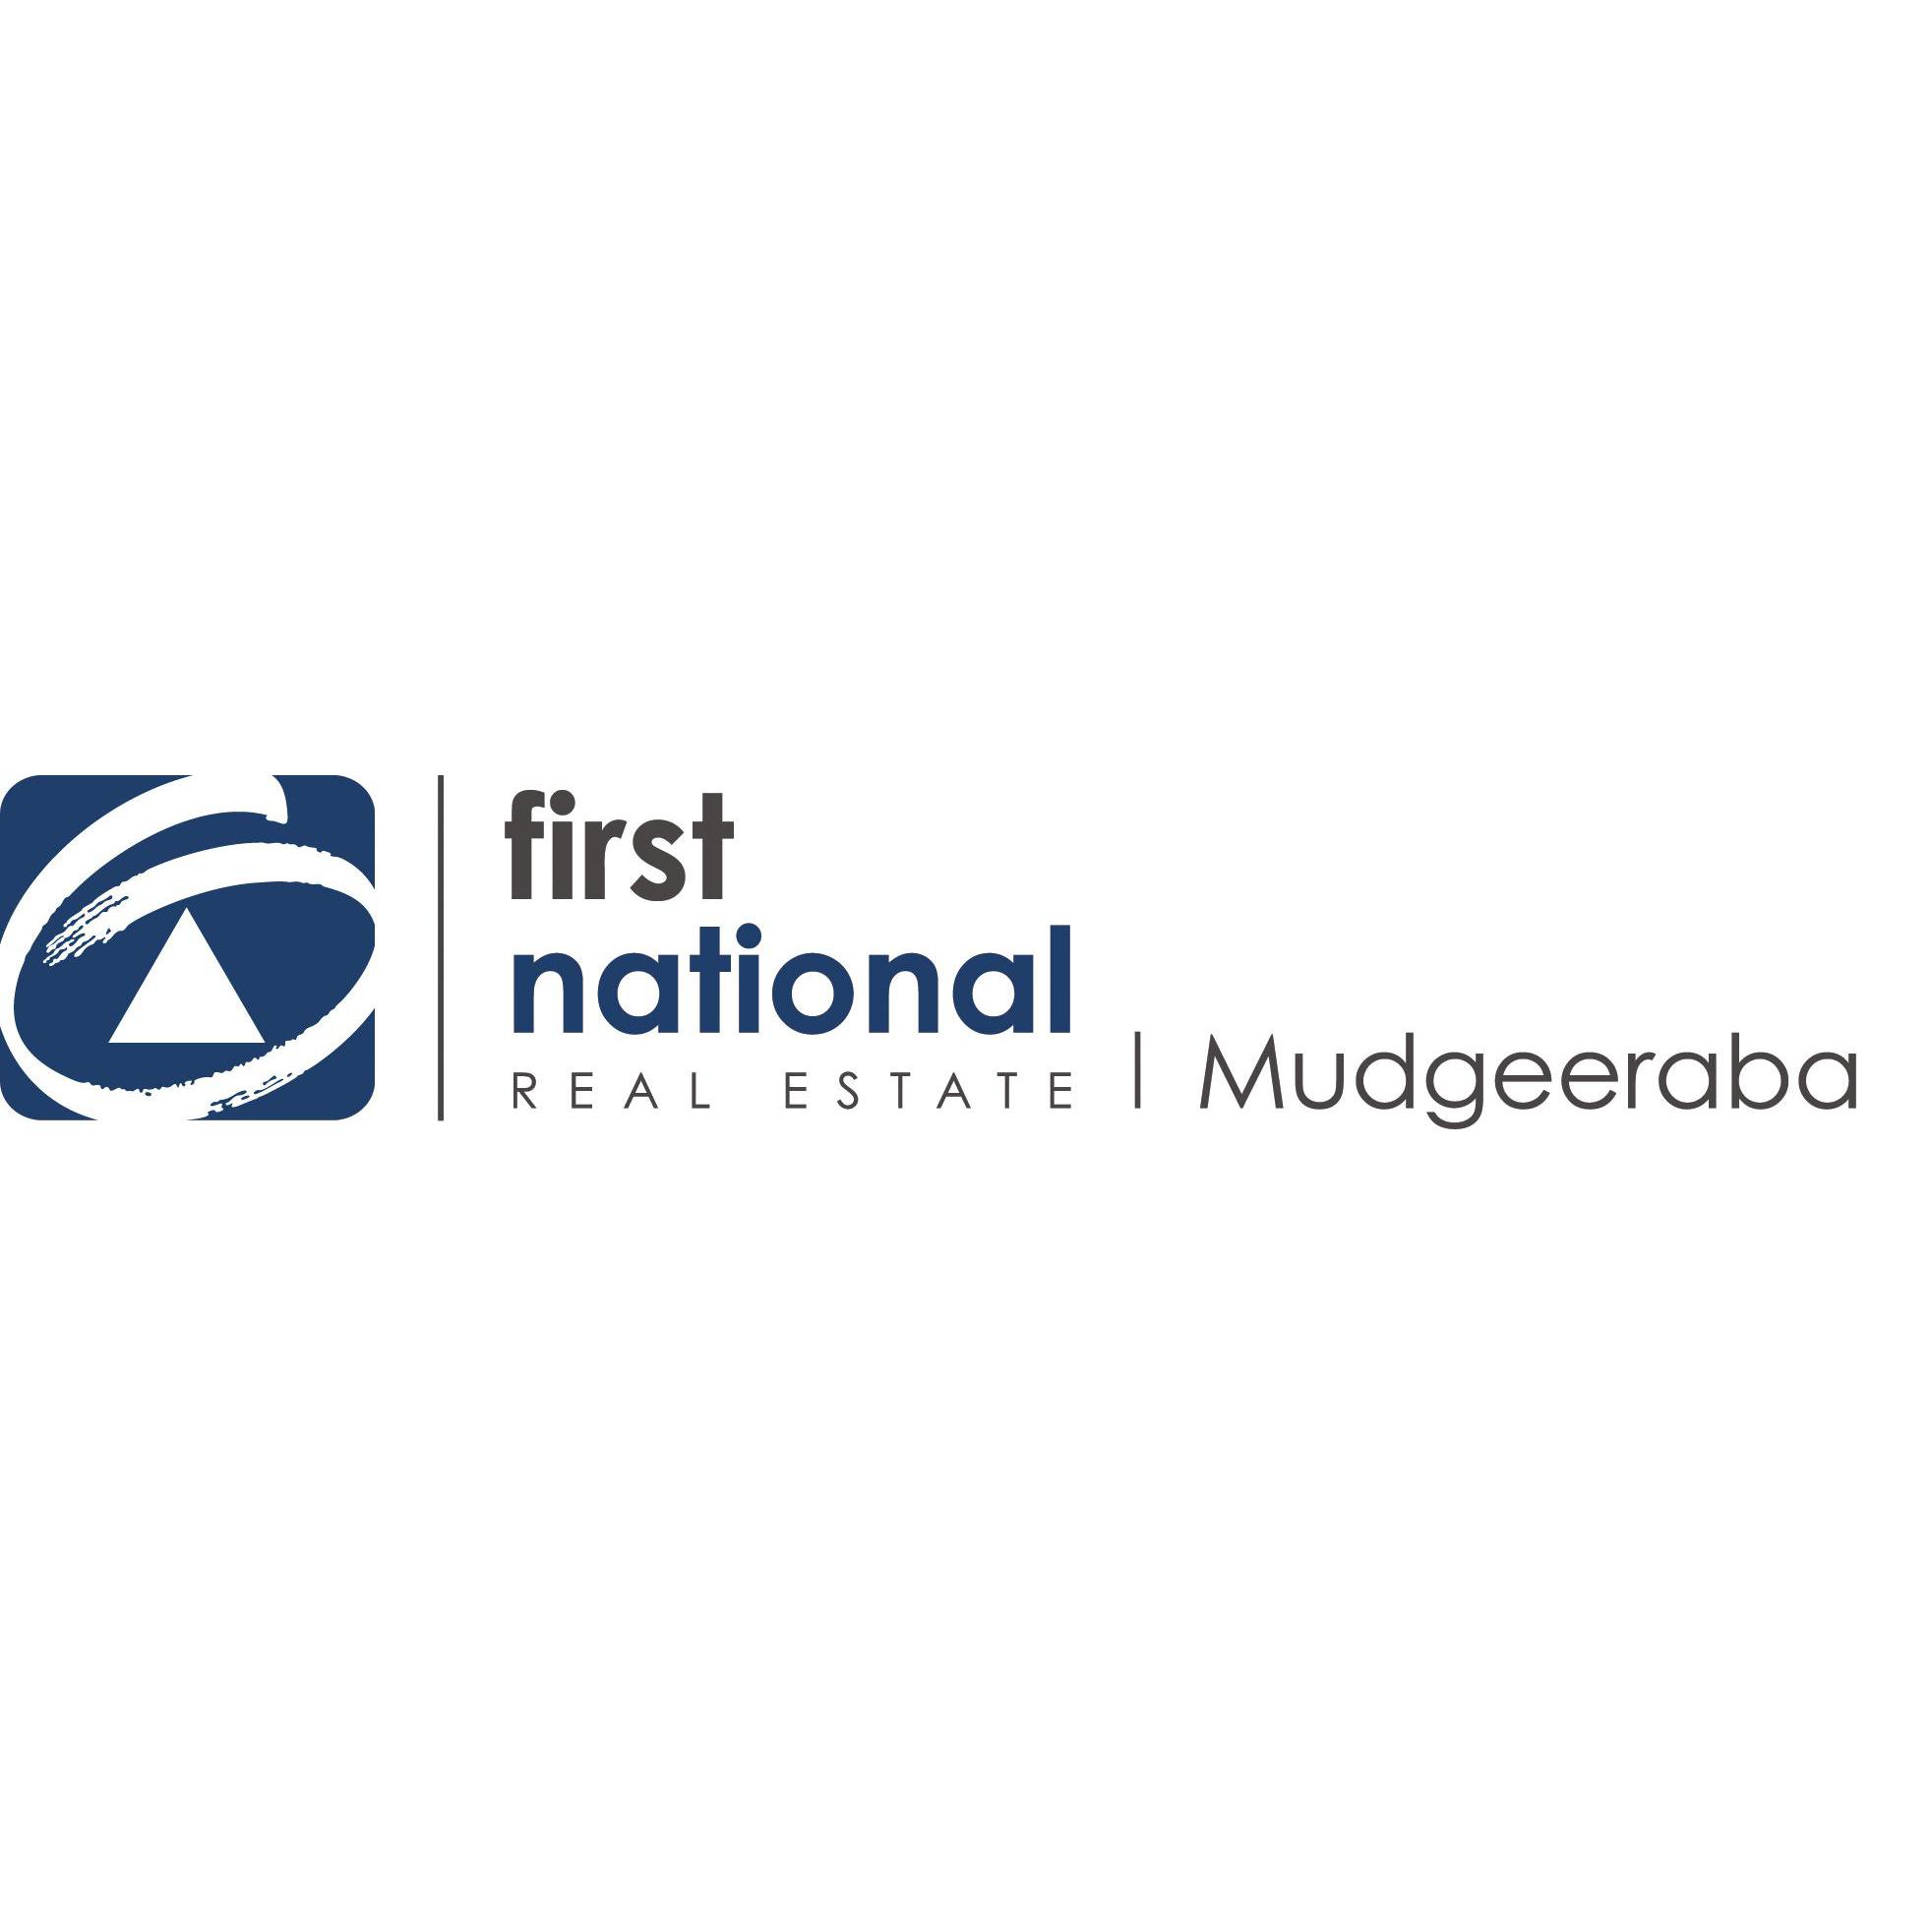 First National Real Estate Mudgeeraba - Mudgeeraba, QLD 4213 - (07) 5525 2866 | ShowMeLocal.com